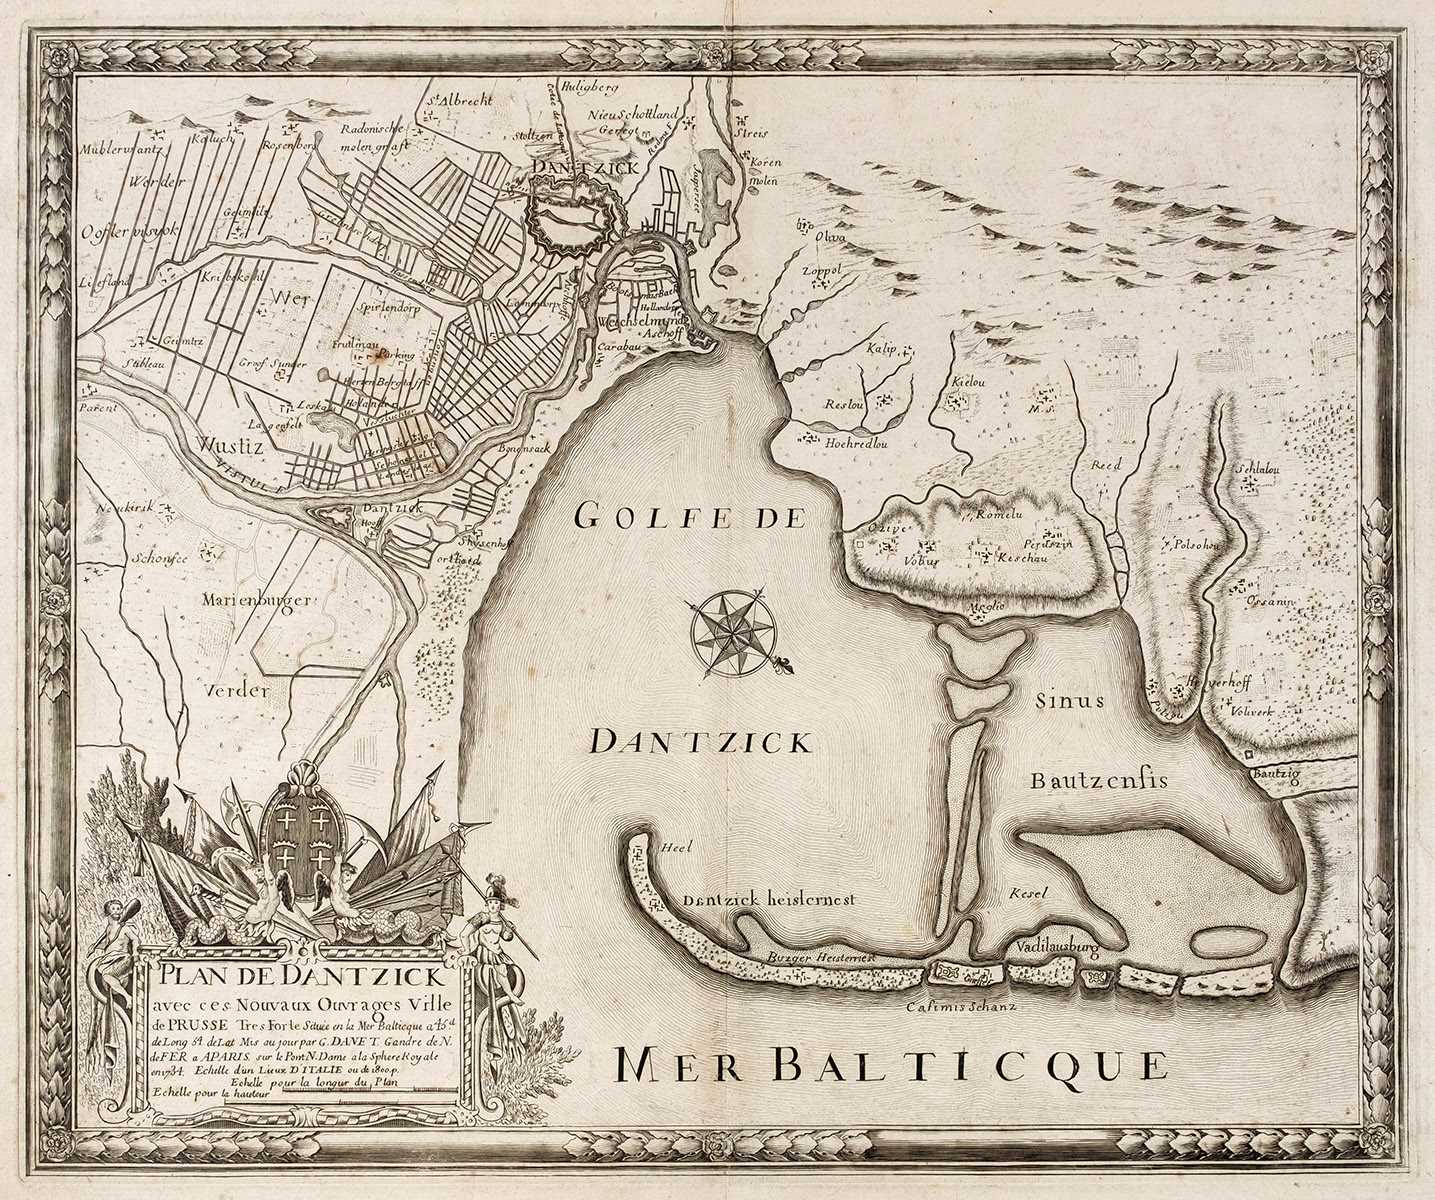 Lot 39 - Gdansk/Danzig.  De Fer (Nicolas & Danet G.), Plan de Dantzick..., Paris, circa 1734